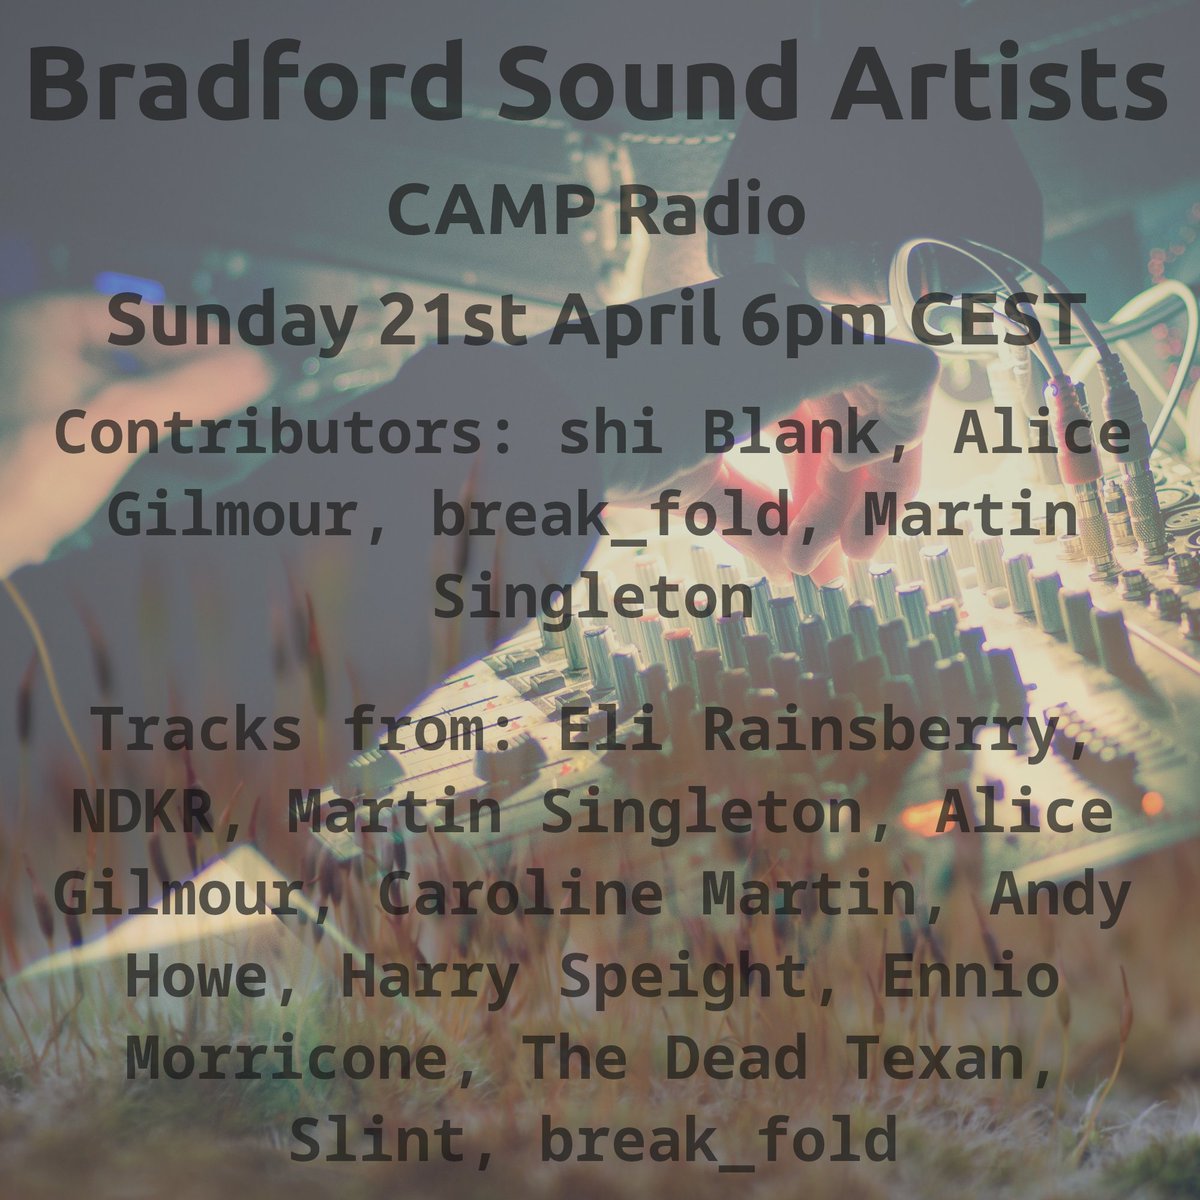 Bradford Sound Artists radio @listen_camp - Sun 21st April, 6pm CEST (5pm in UK). Contributions from shi Blank, @agilmour25, Martin Singleton, Tim Hann.

#music #radio #soundartists #bradford2025 #eclectic #international #bradford #newmusic